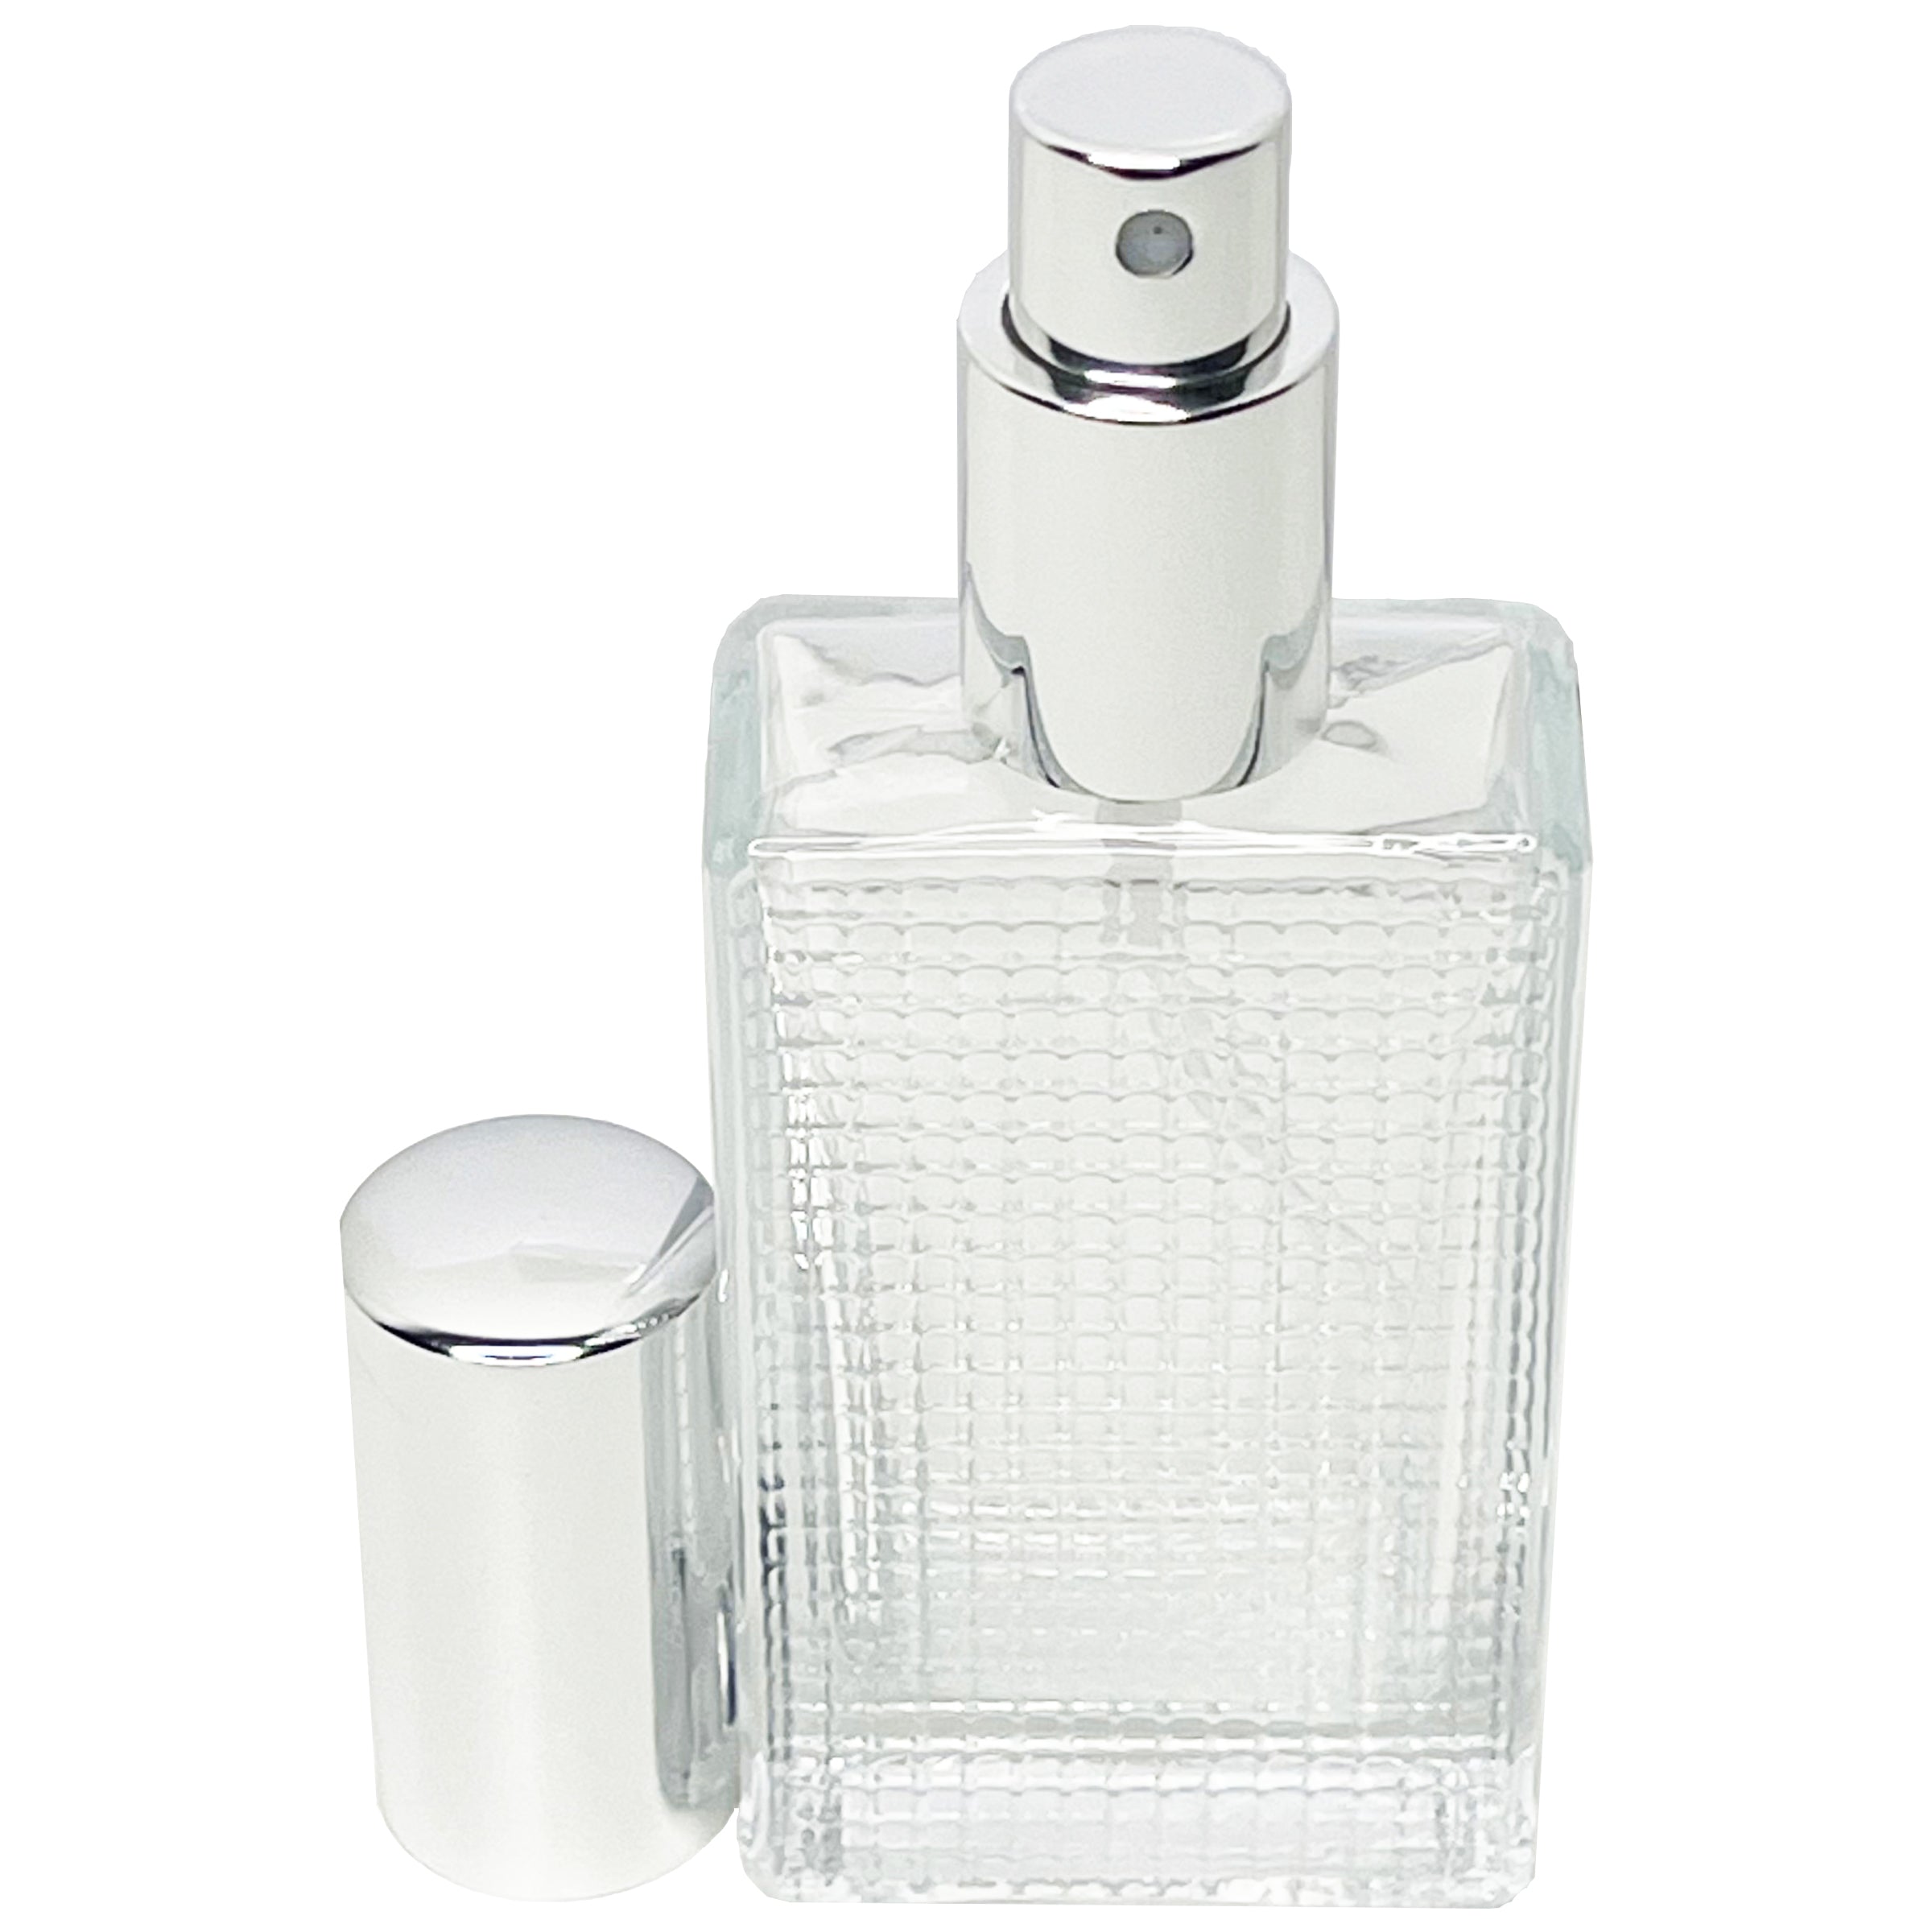 50ml 1.7oz grid glass perfume spray bottles